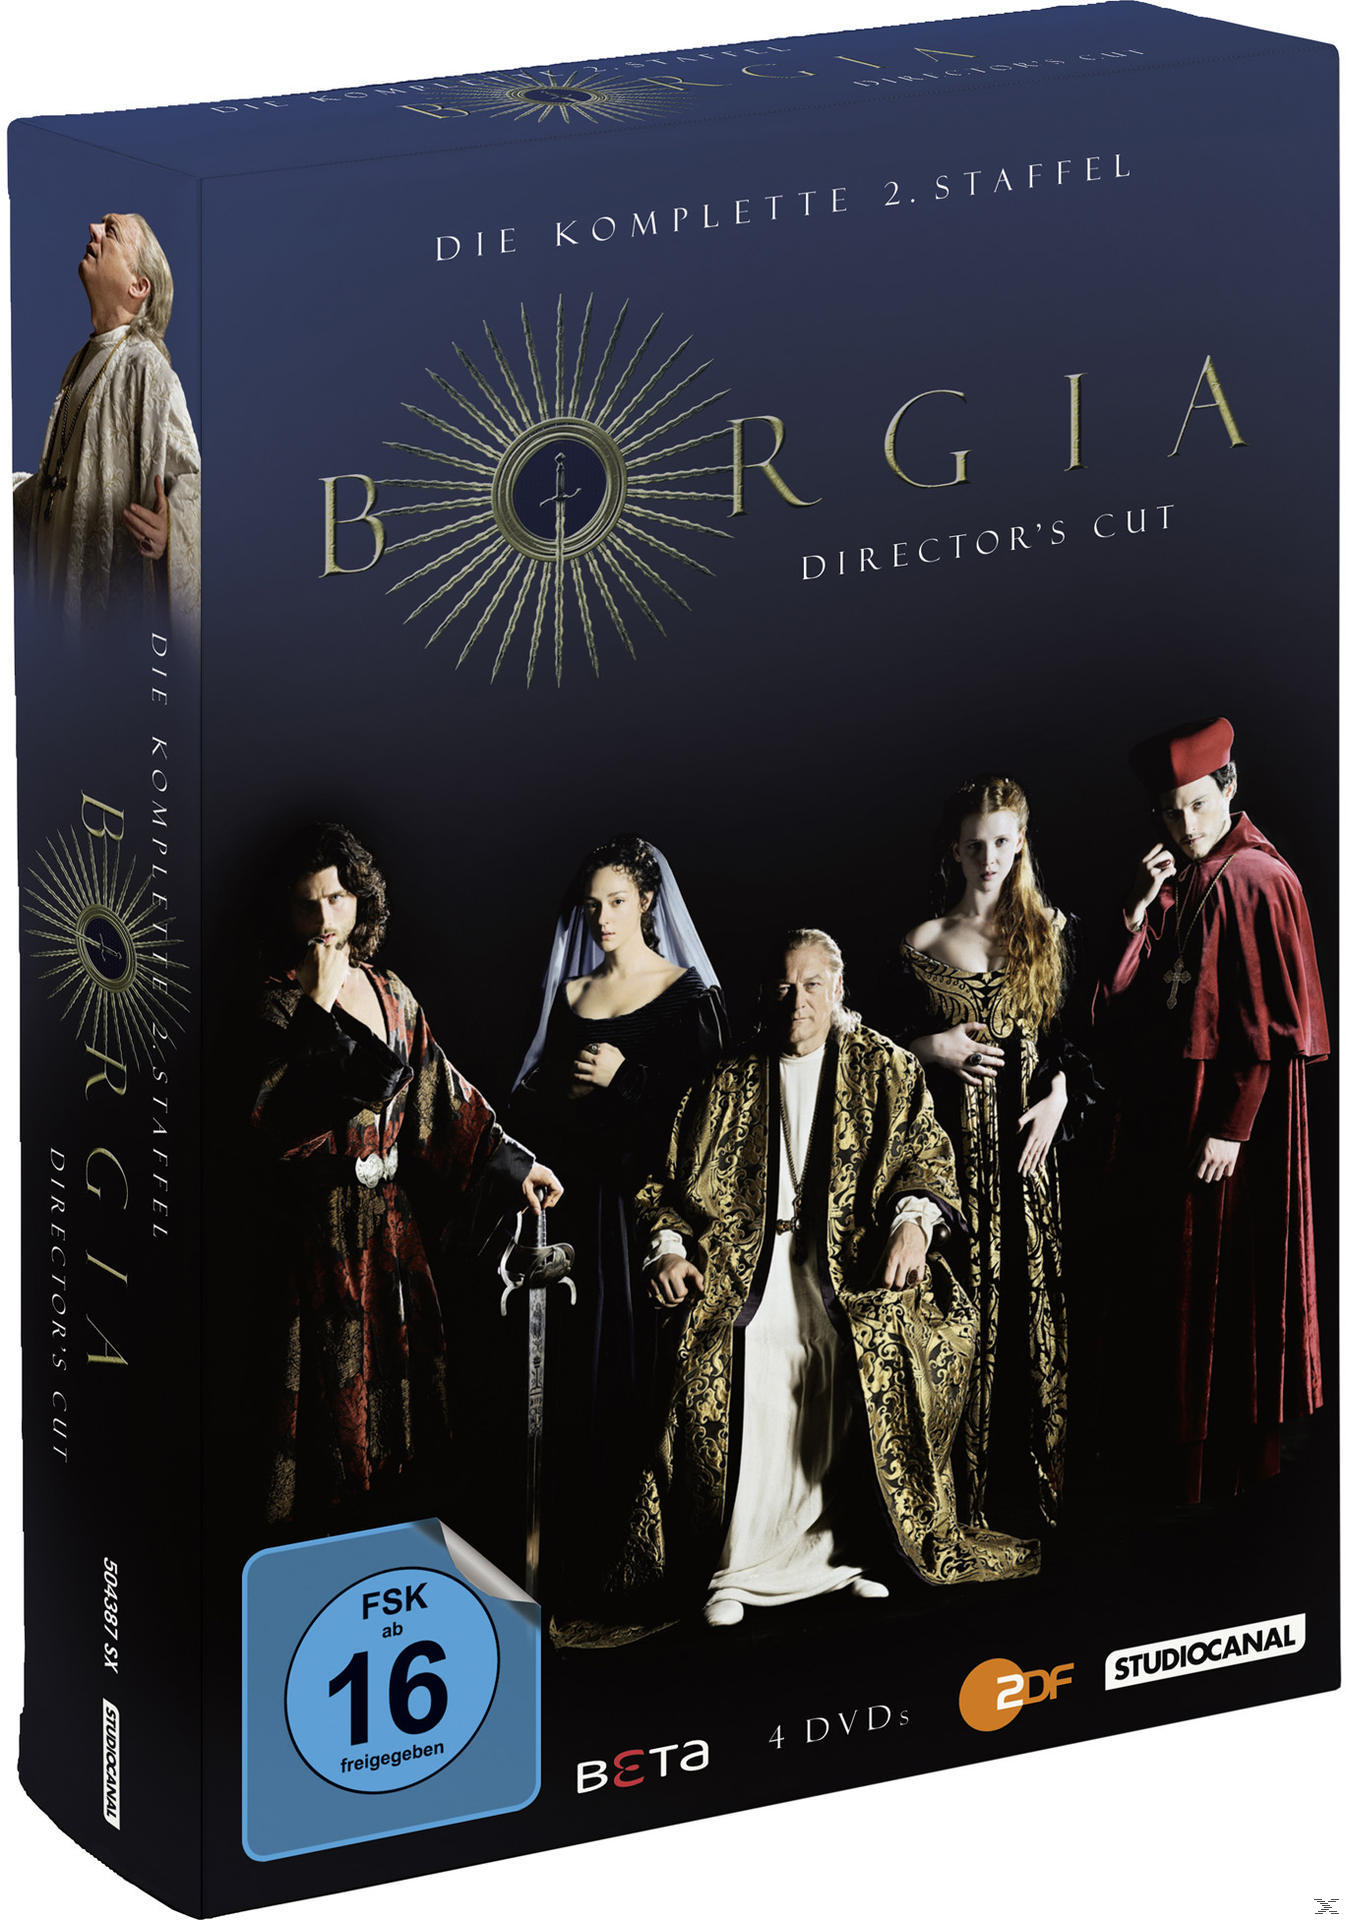 Cut) Borgia Staffel DVD (Director’s - 2